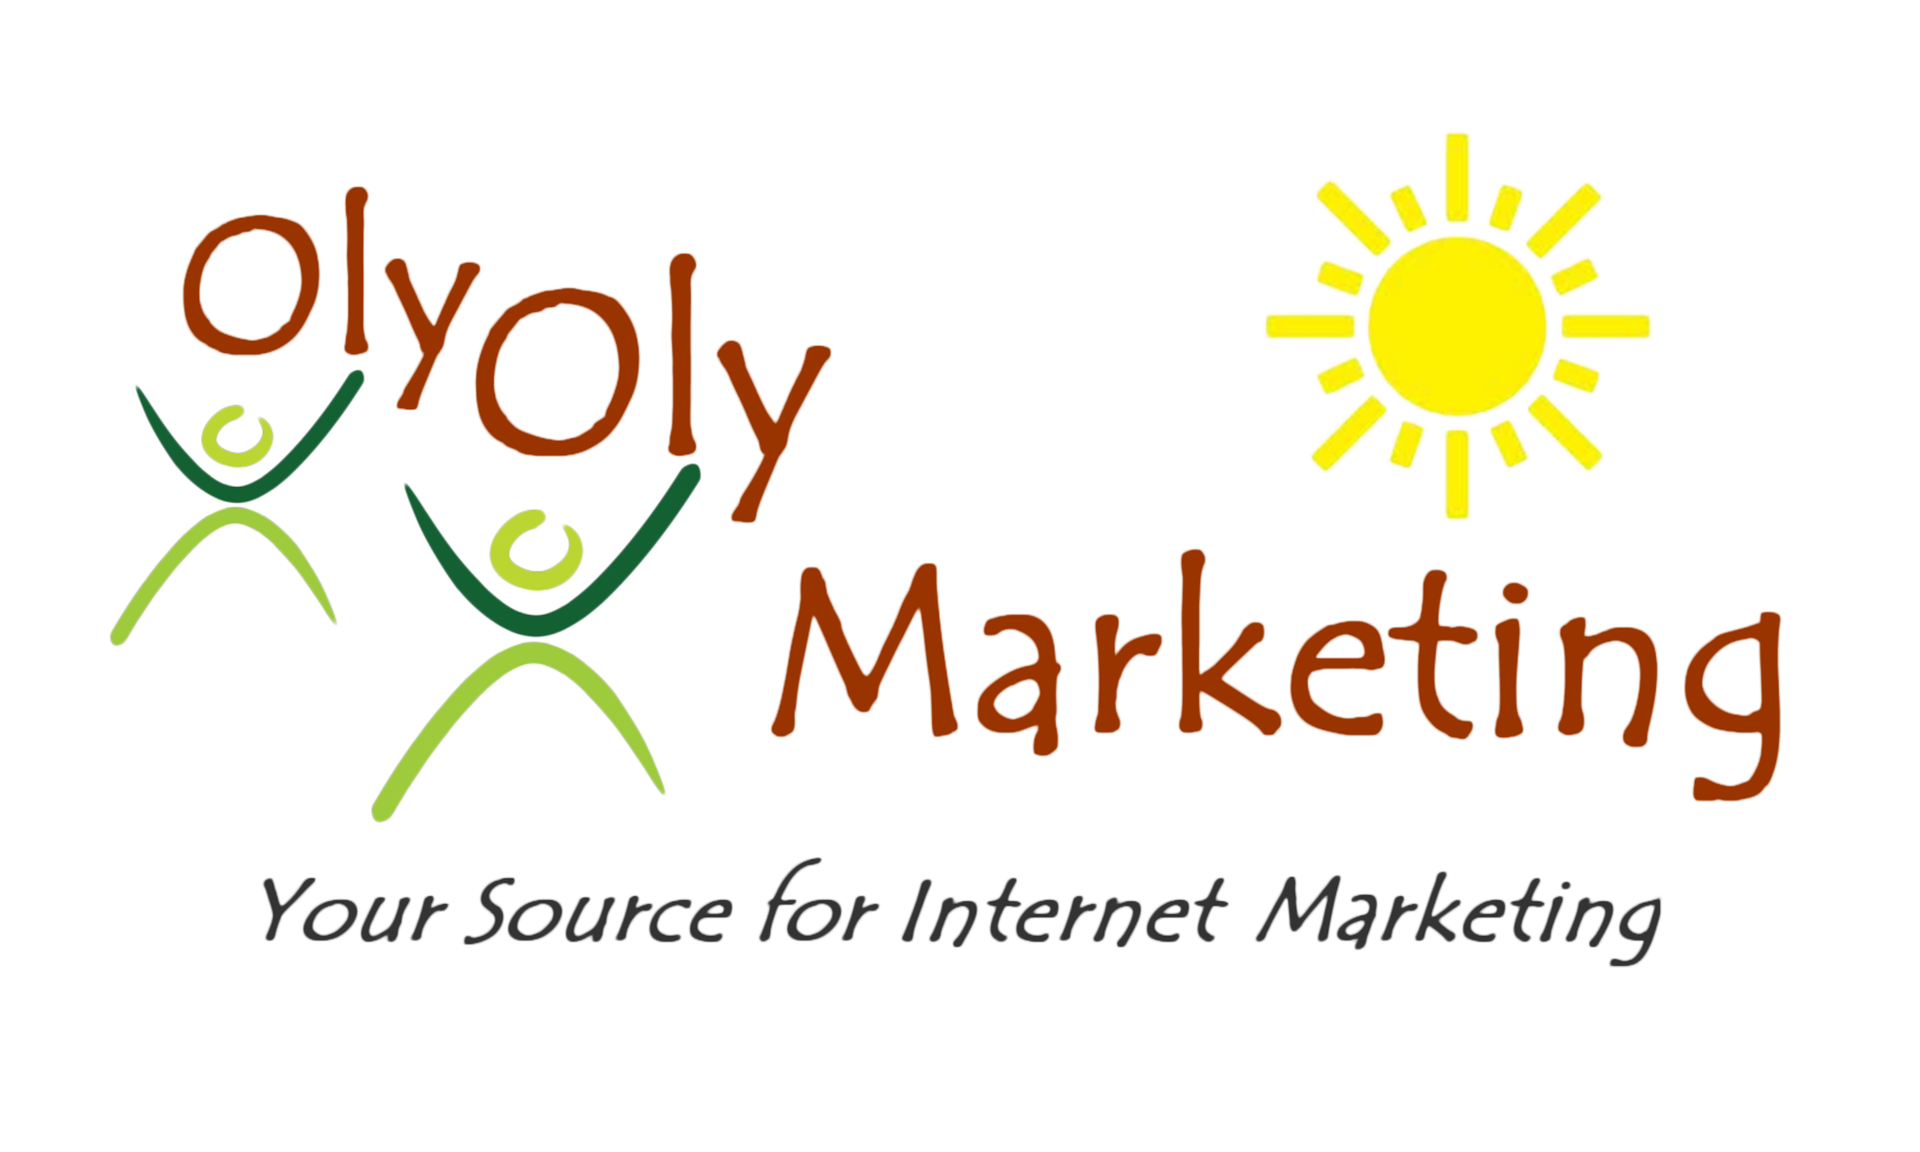 OlyOly Marketing St. Louis MO